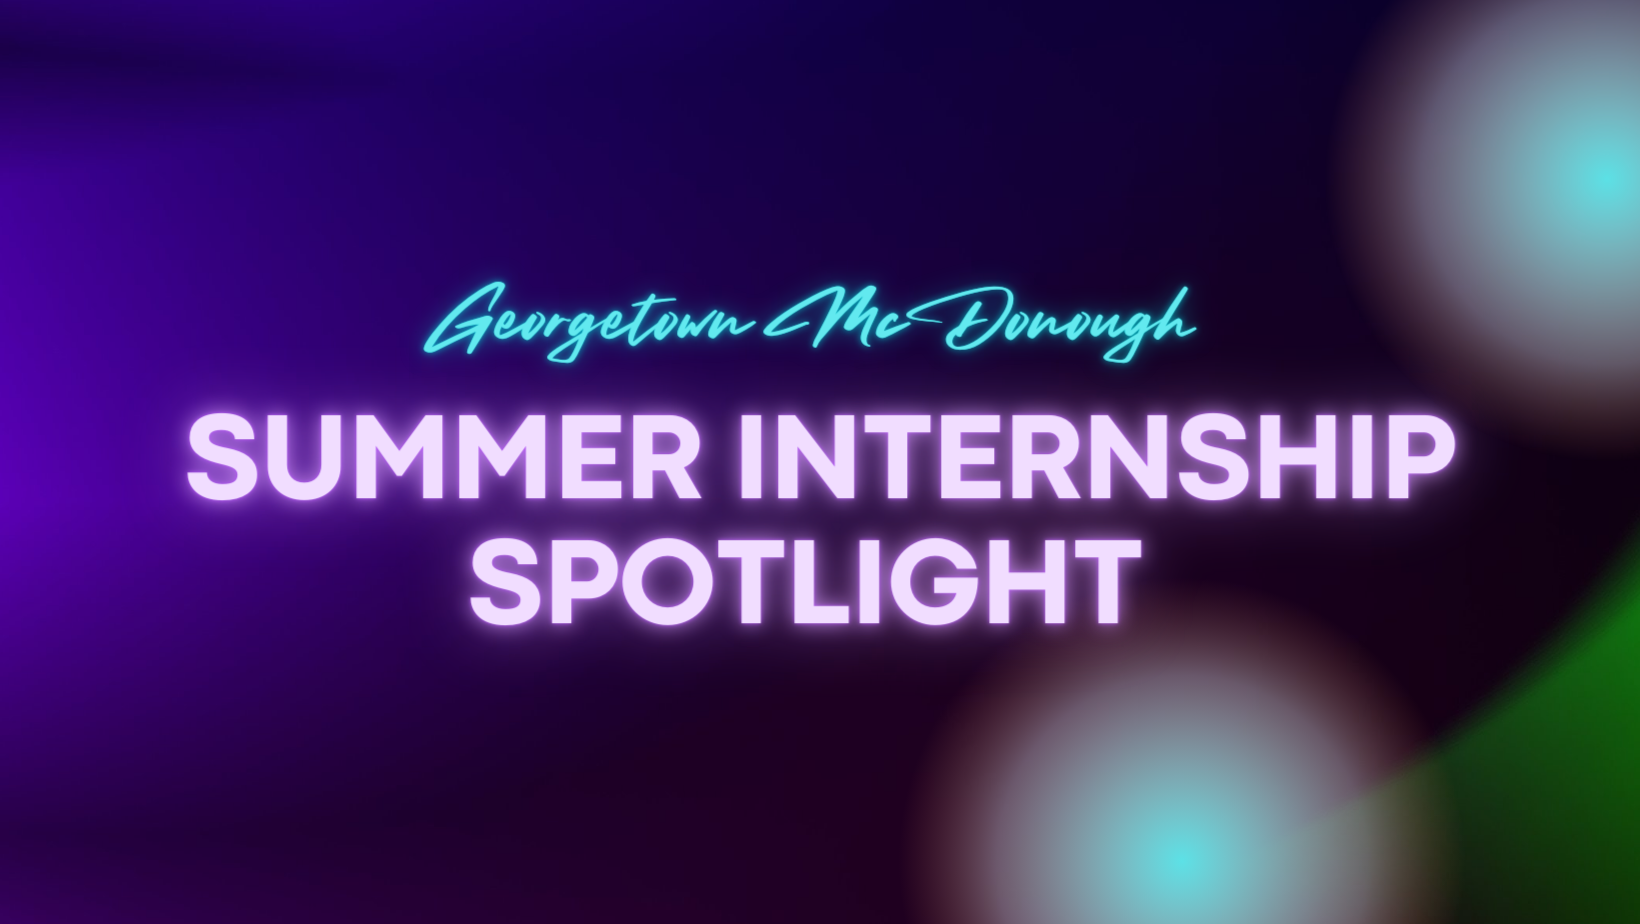 Georgetown McDonough Summer Internship Spotlight